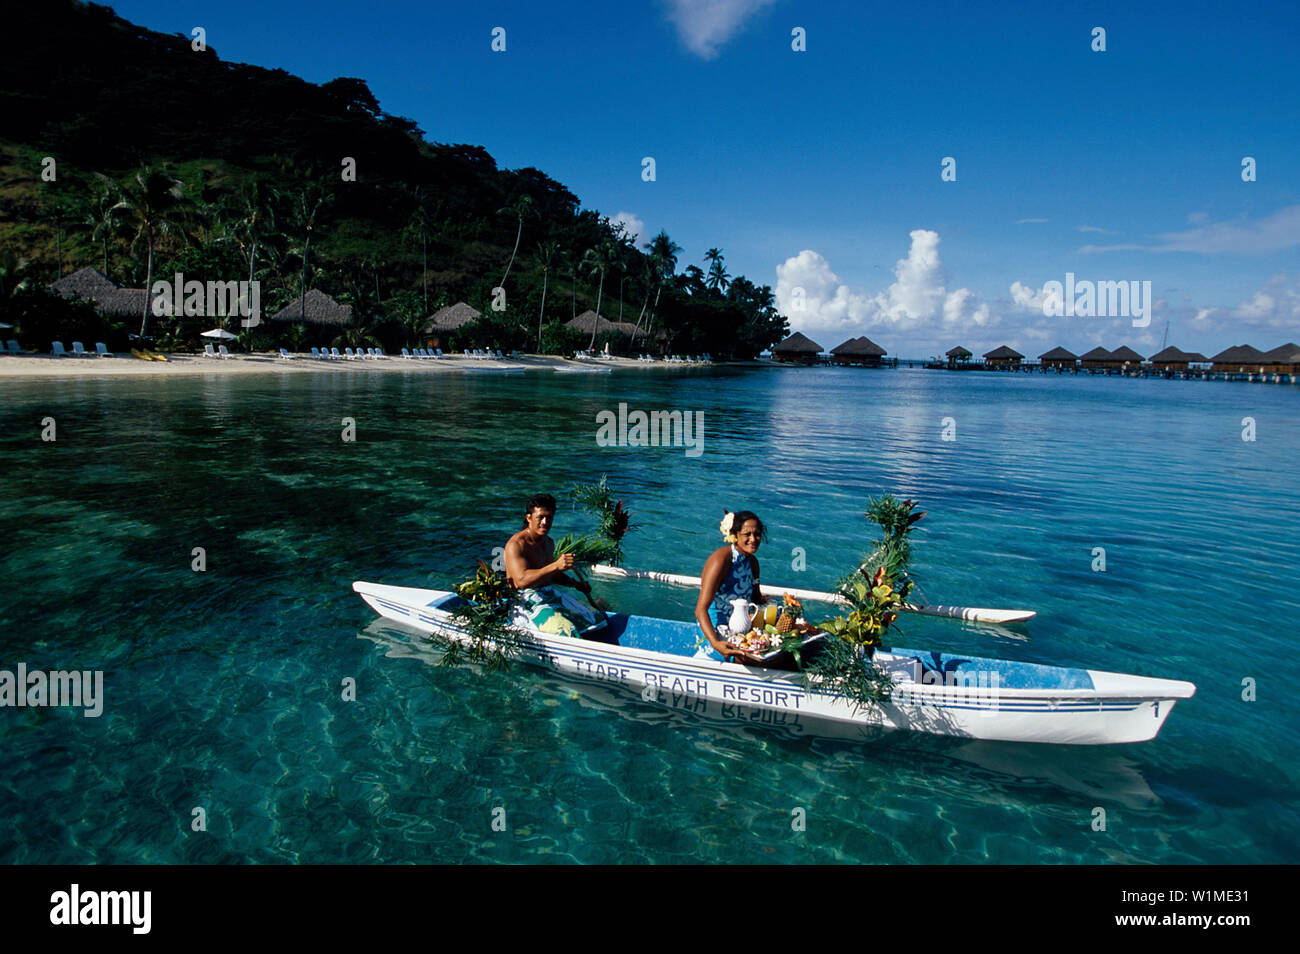 Fruehstueck auf dem Kanu, Te Tiare Beach Resort, Huahine Franzoesisch-Polynesien Foto de stock